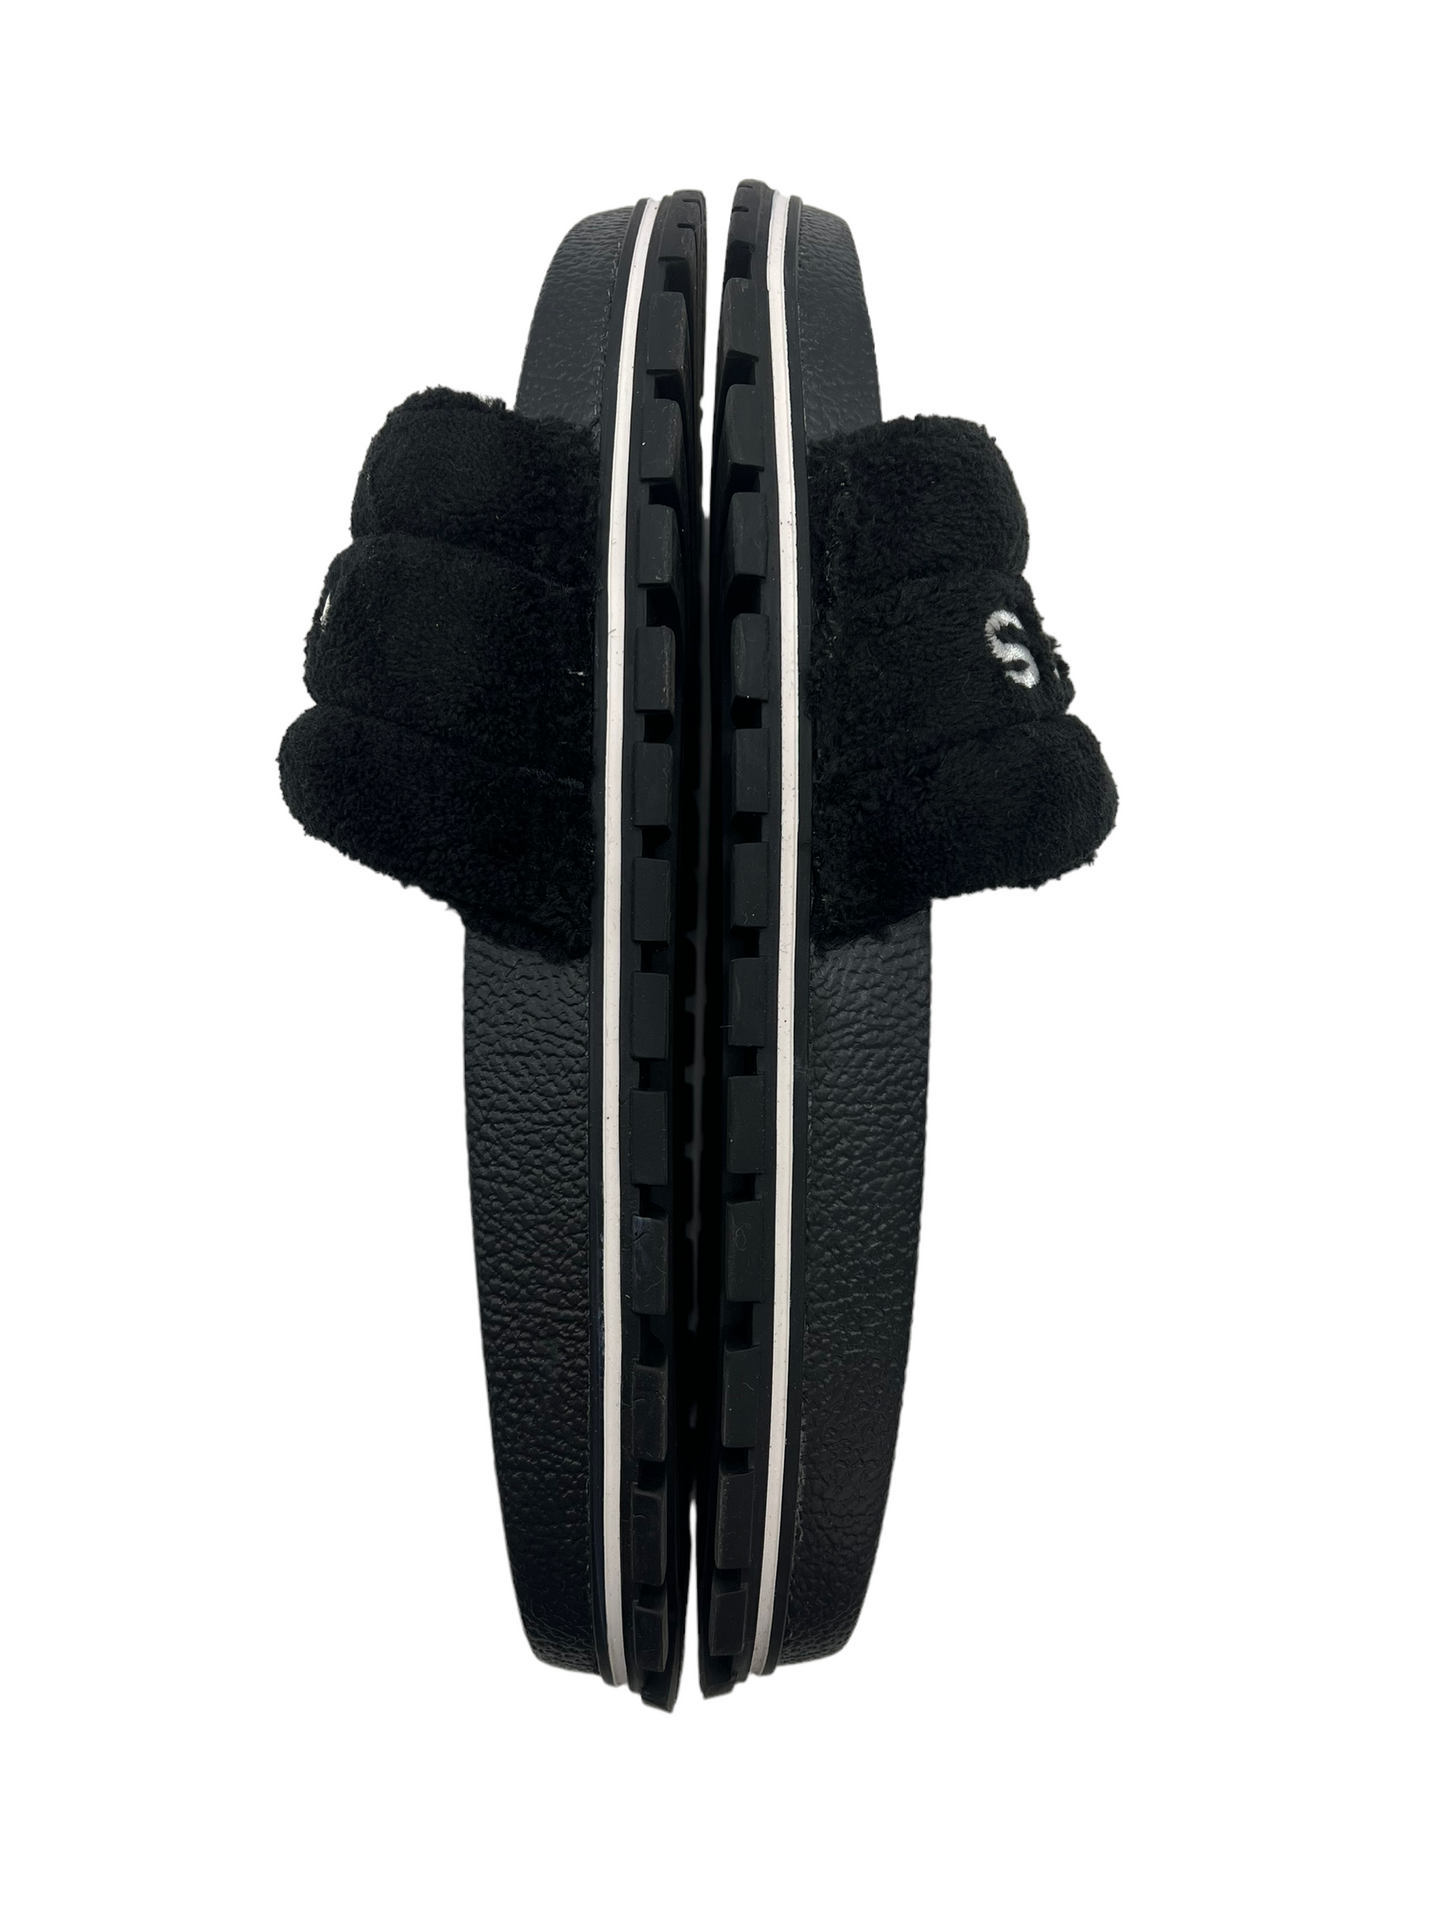 Marc Jacobs Black & White "The Slide" Size 41 Sandals